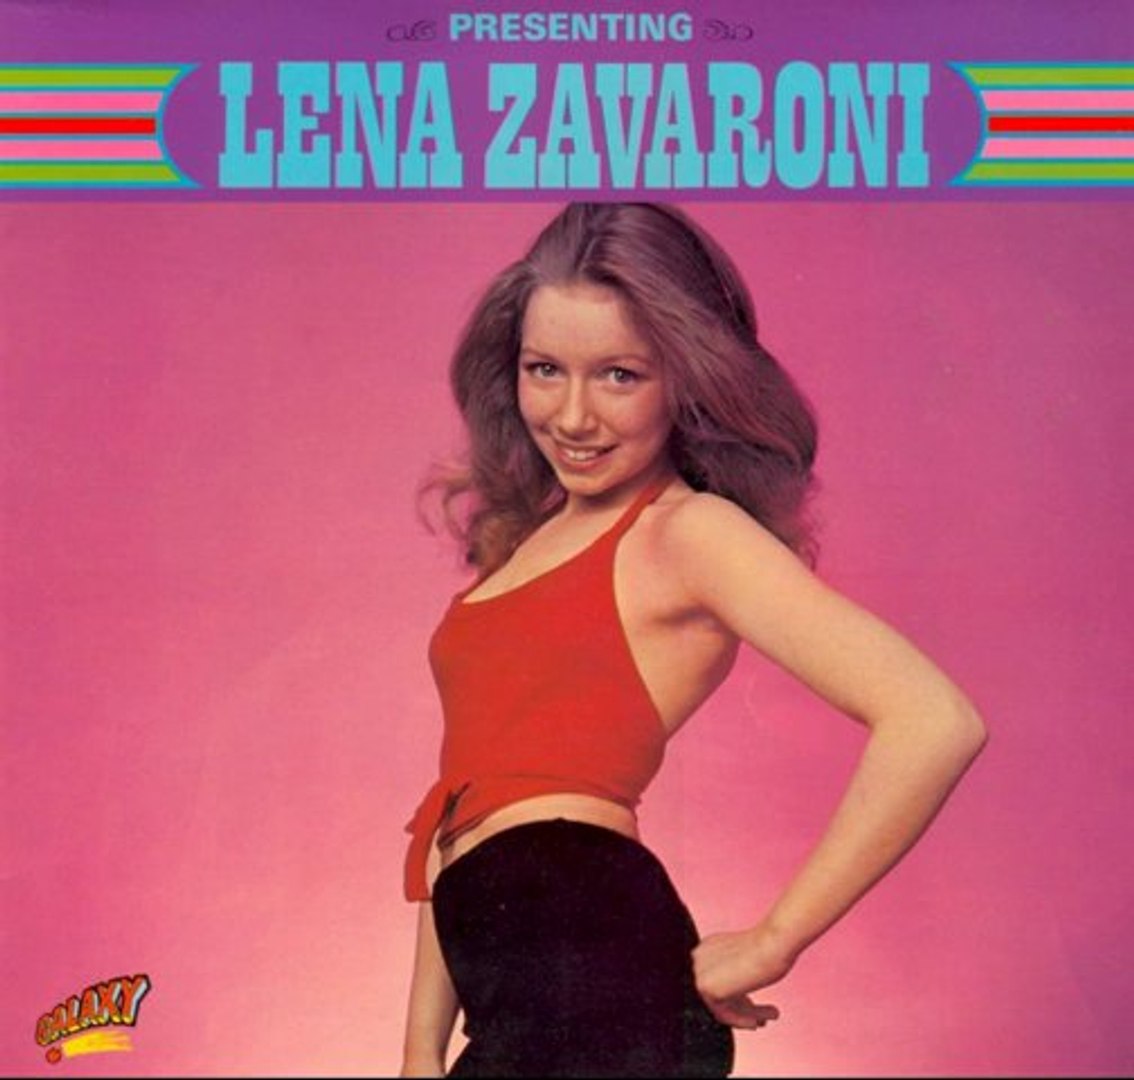 Front Cover for the album Presenting Lena Zavaroni (1977)